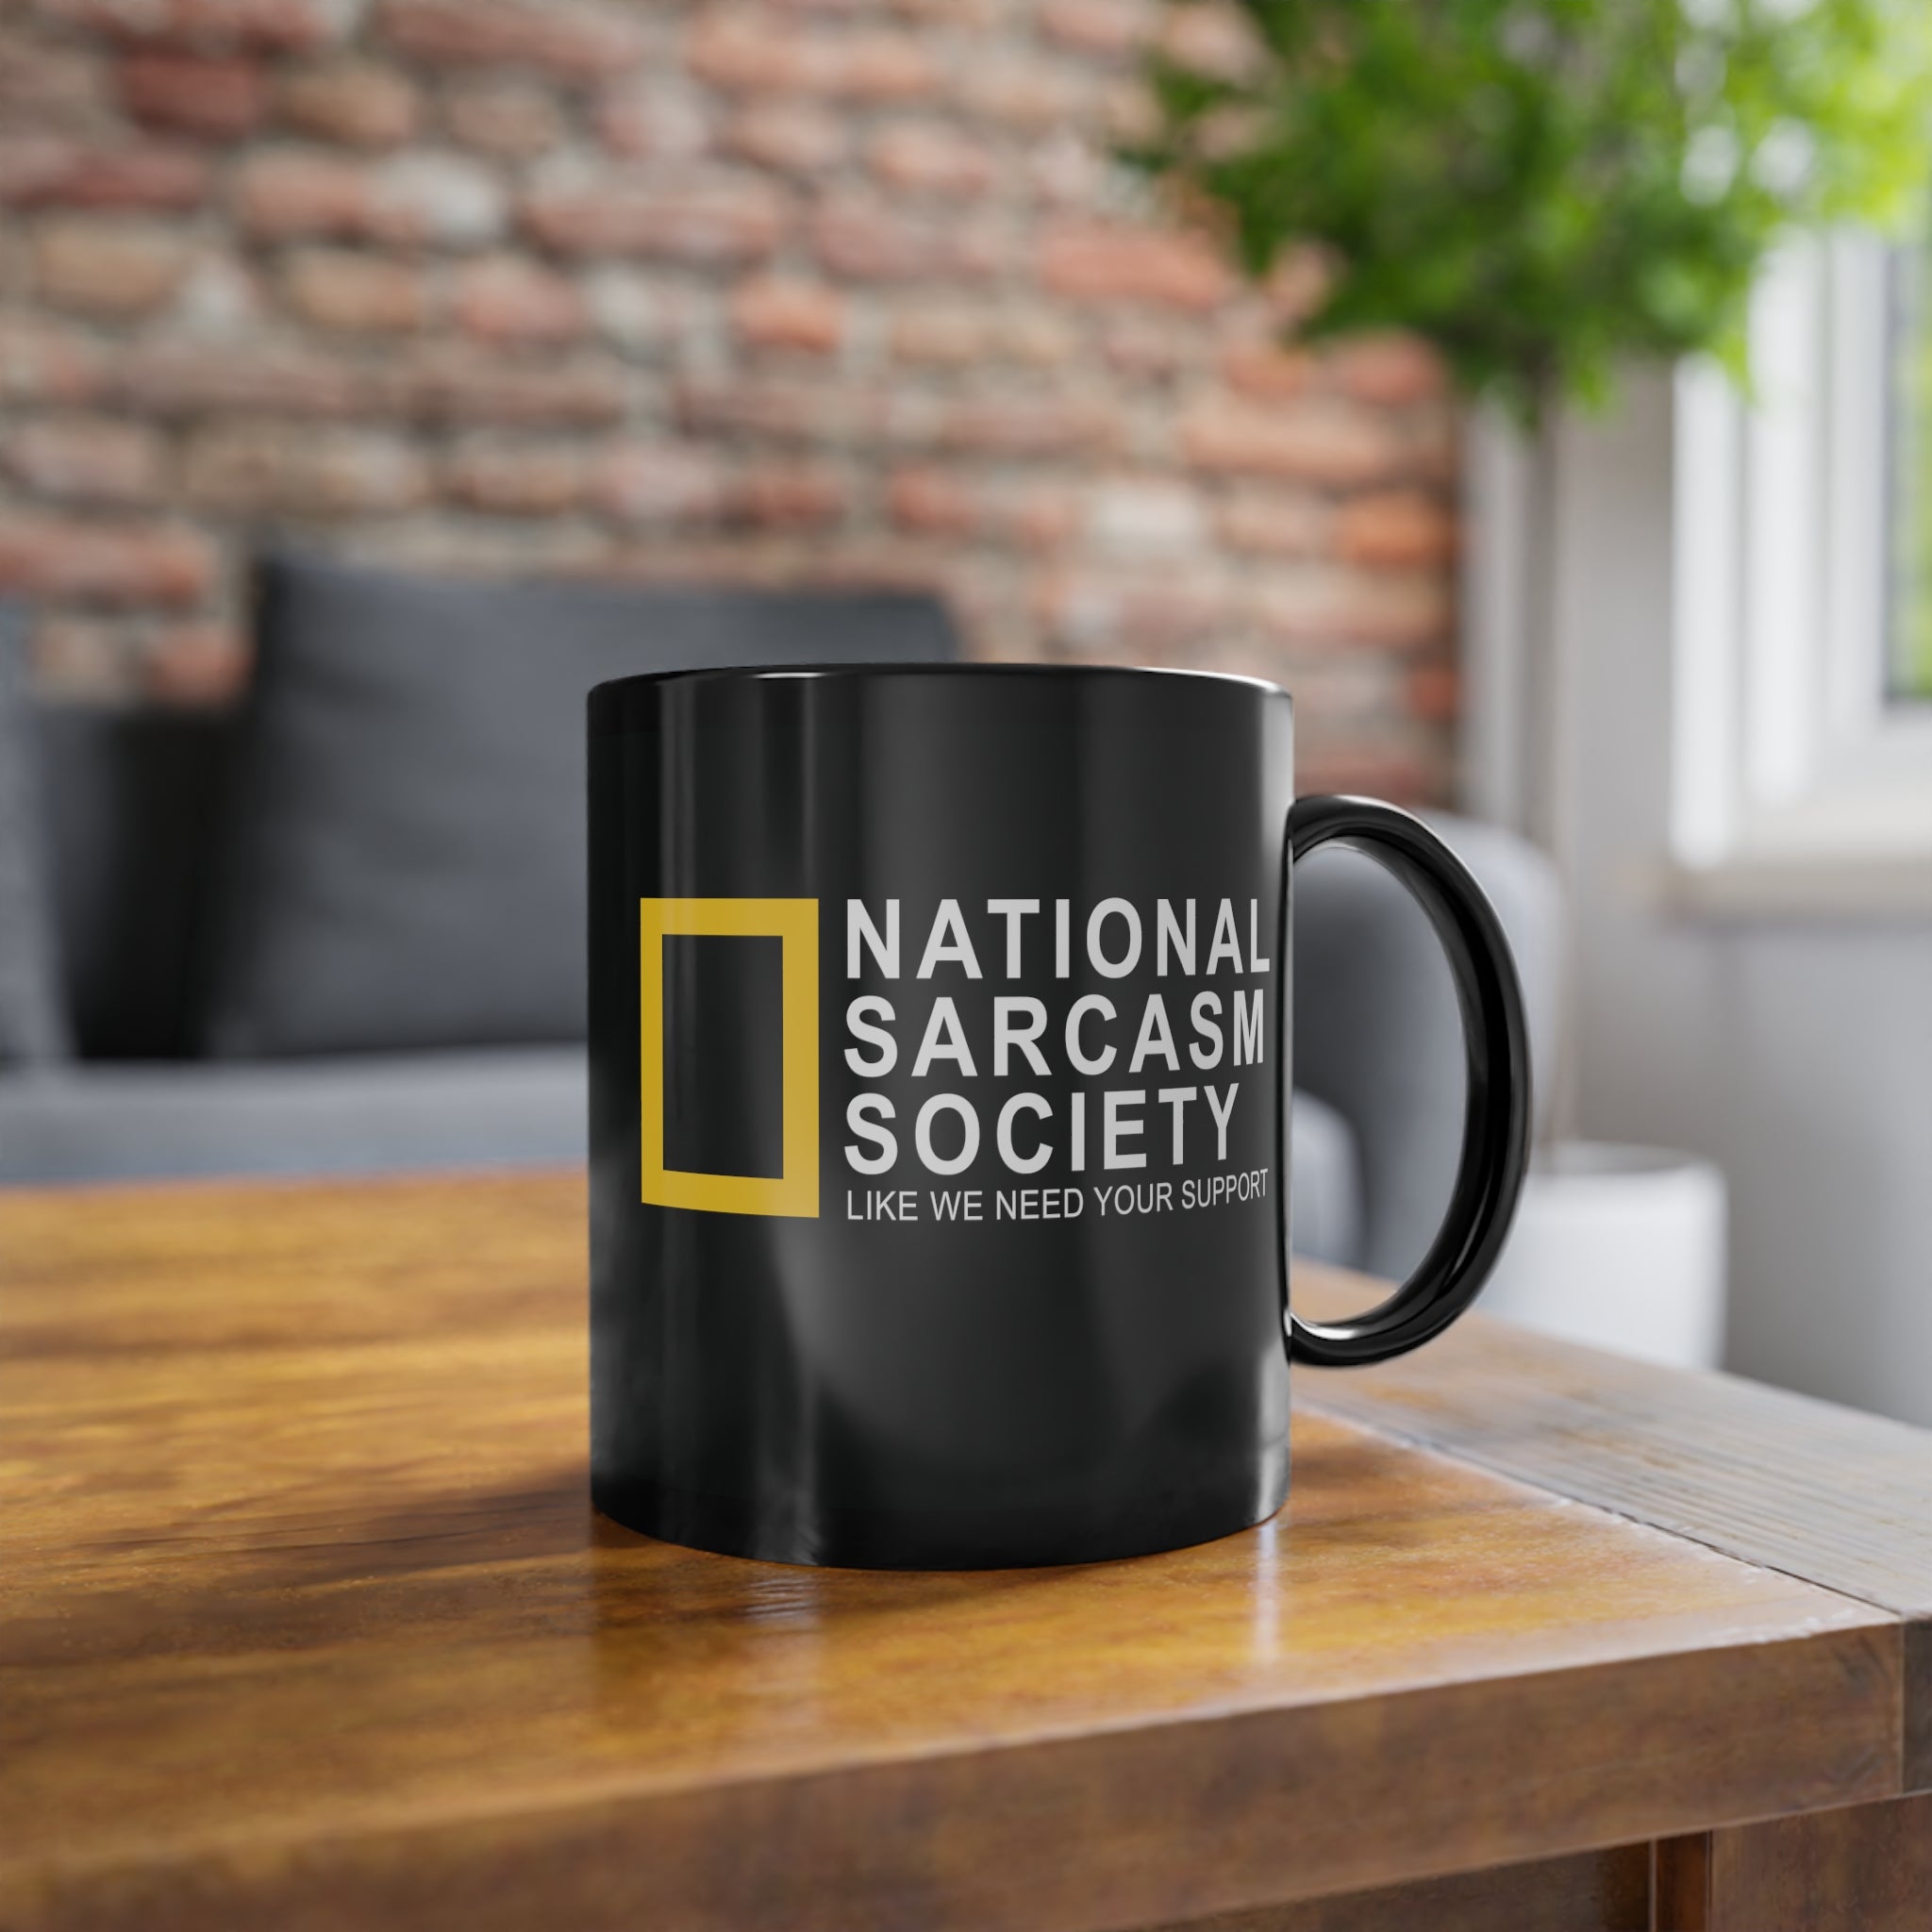 National Sarcasm Society Lustige Sarkasmus Kaffee Tasse